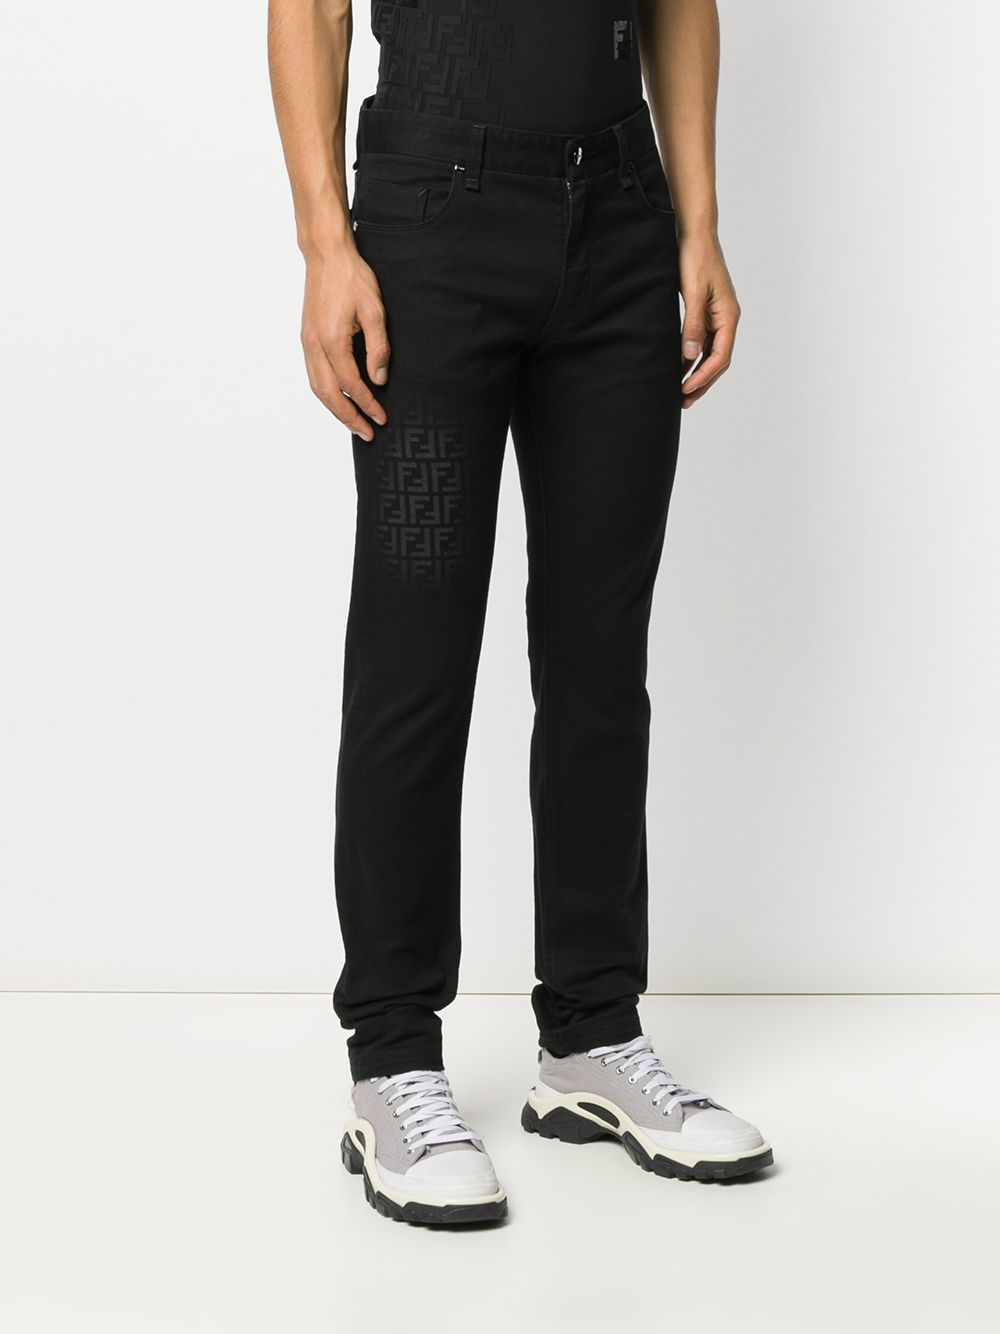 фото Fendi джинсы скинни с логотипом ff